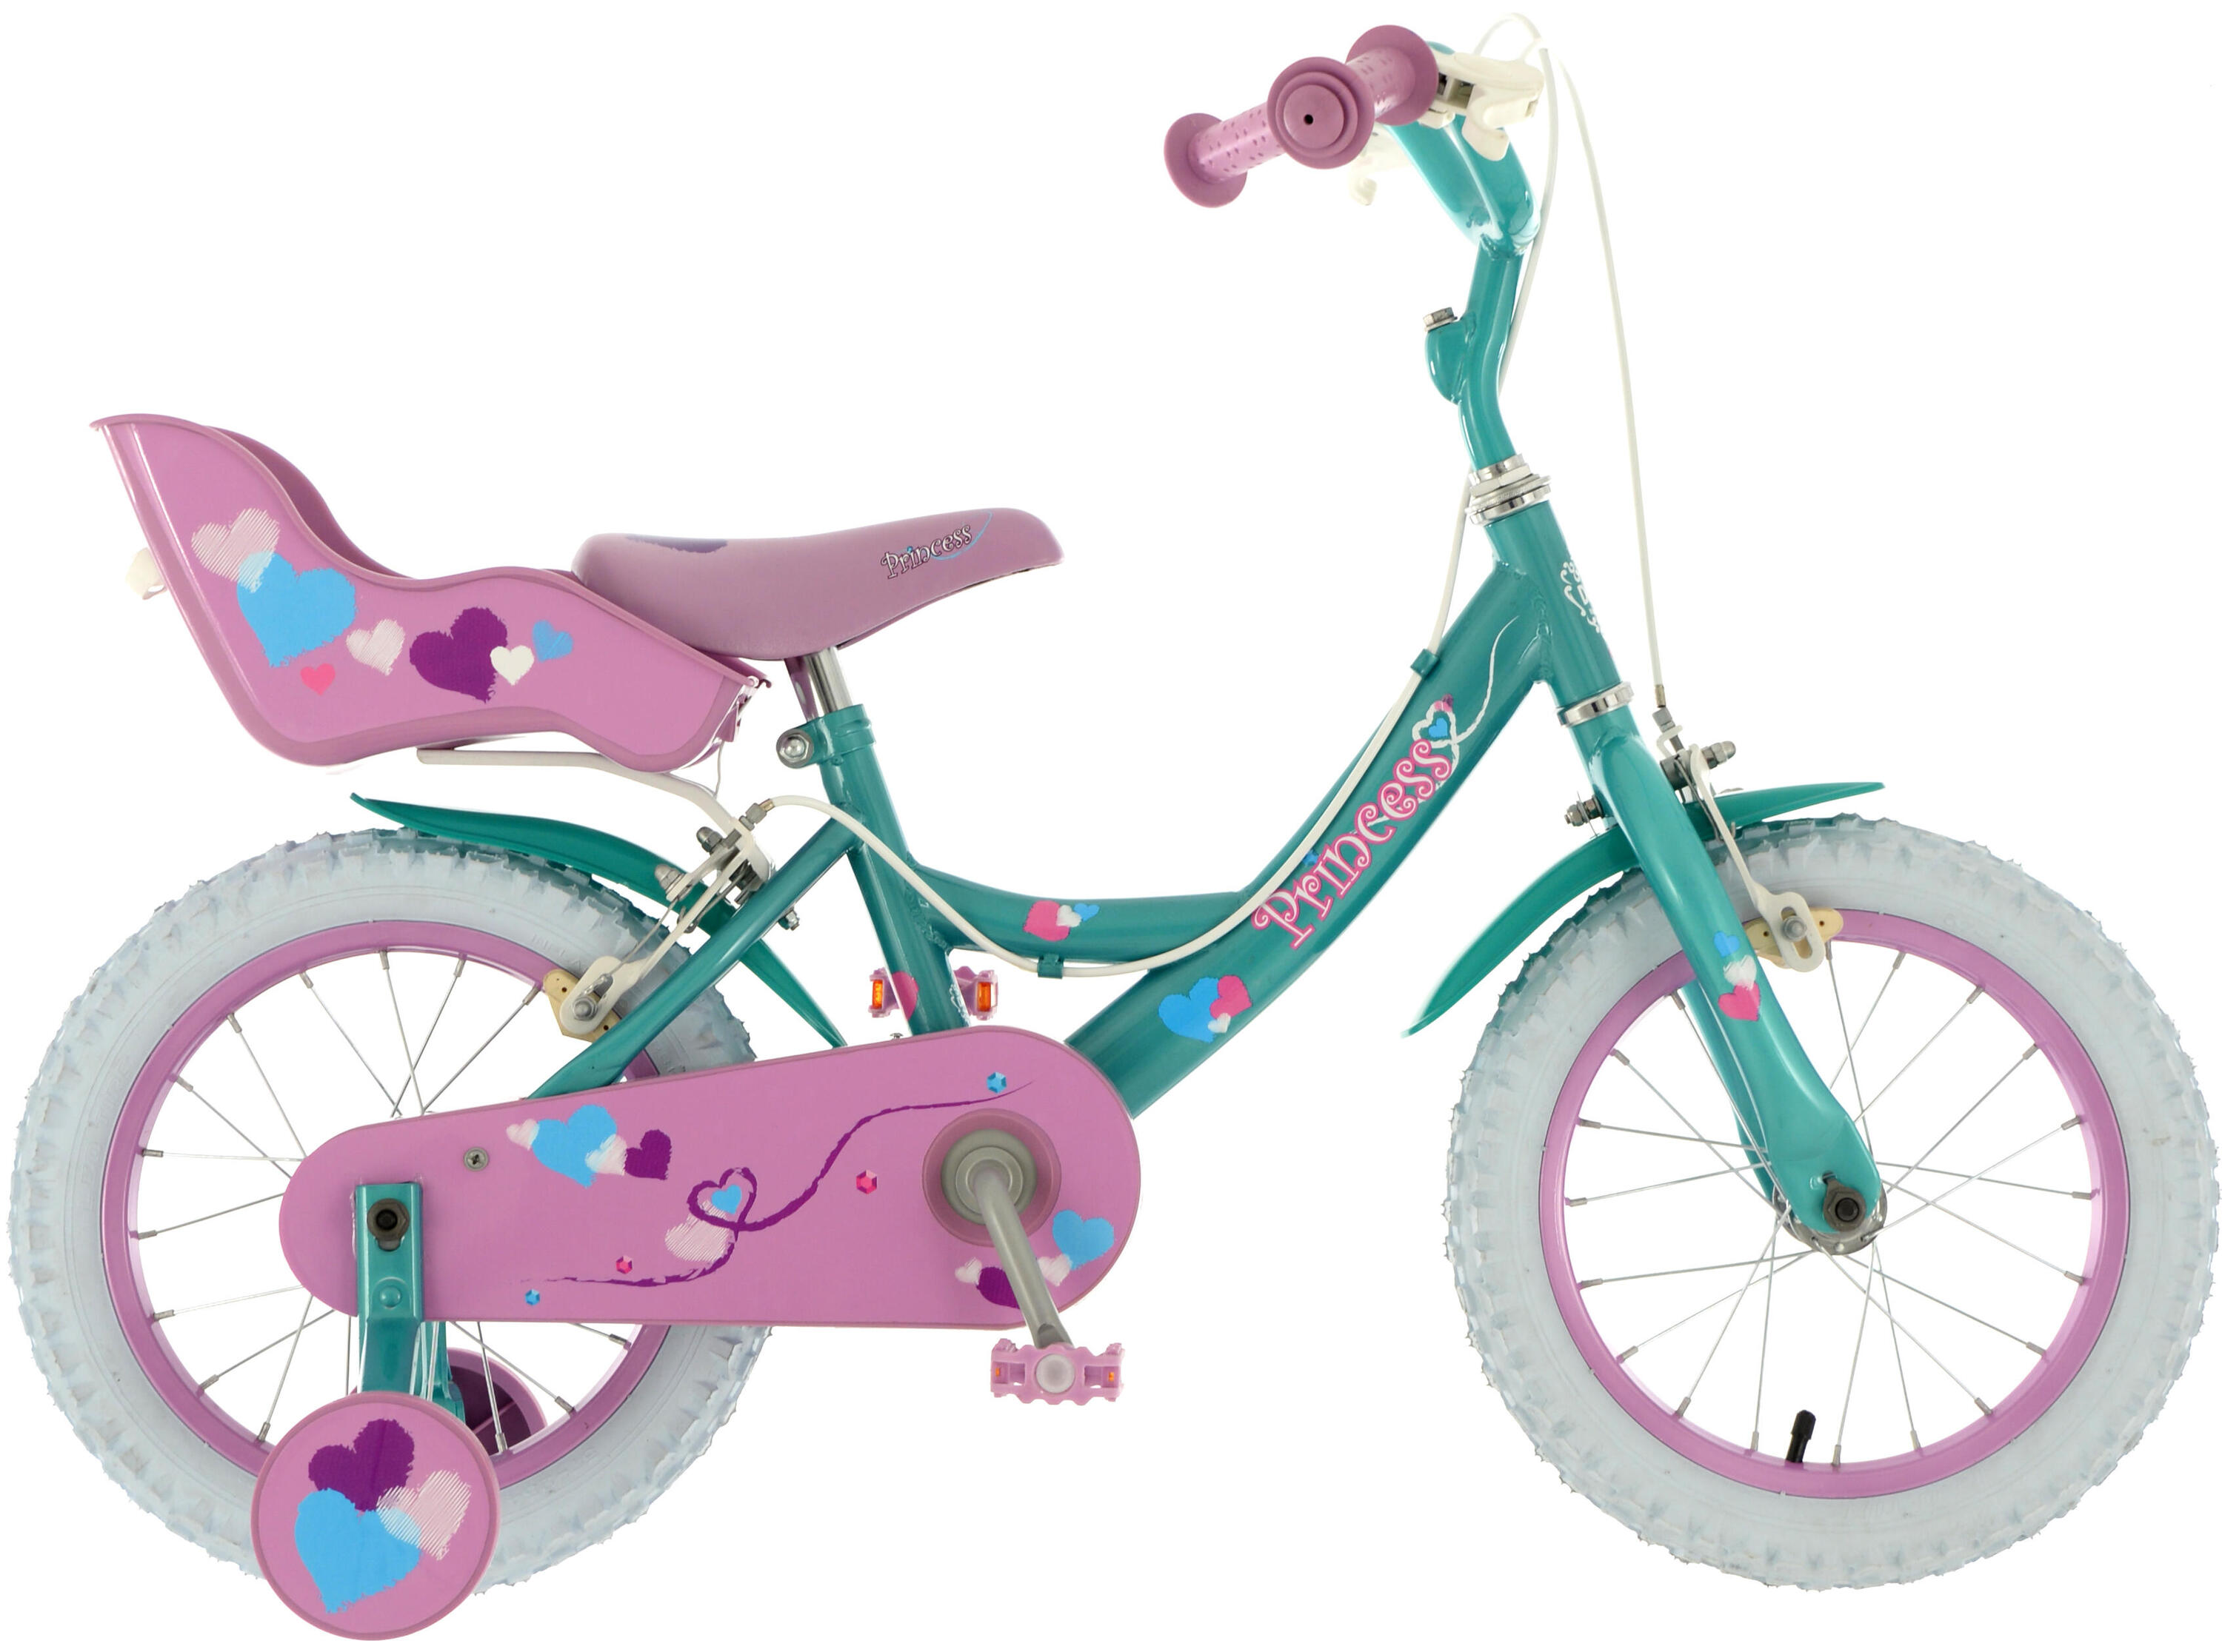 Dawes 14" Junior Bike Princess Mint 1/7